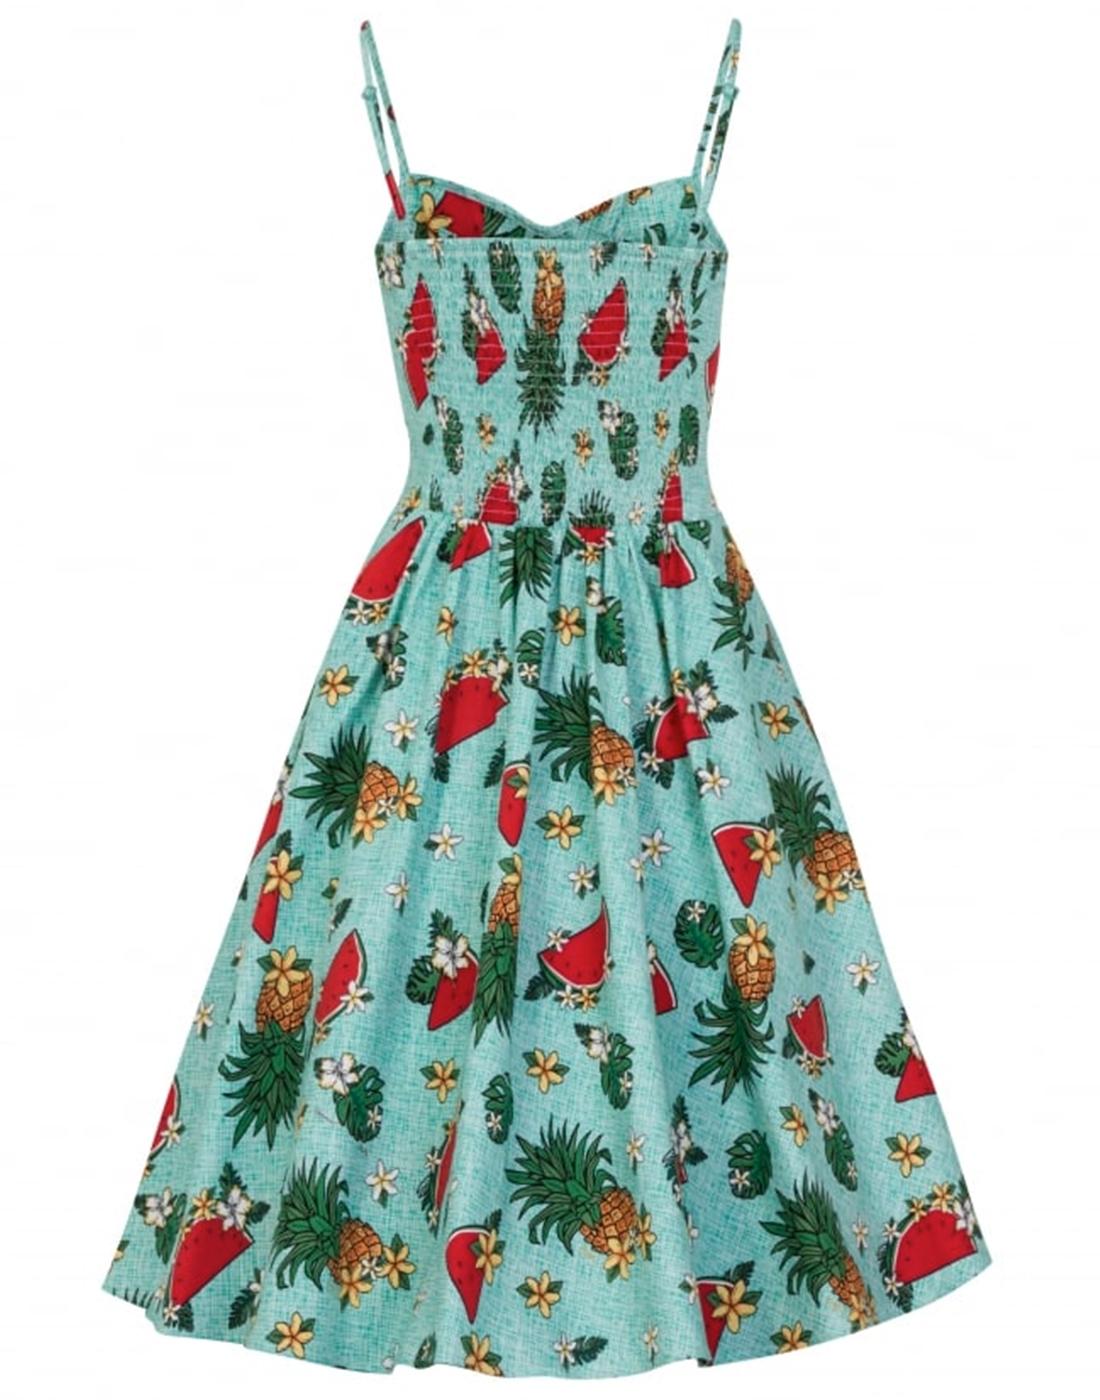 COLLECTIF Fairy Tropical Fruit Floral Vintage Doll Dress